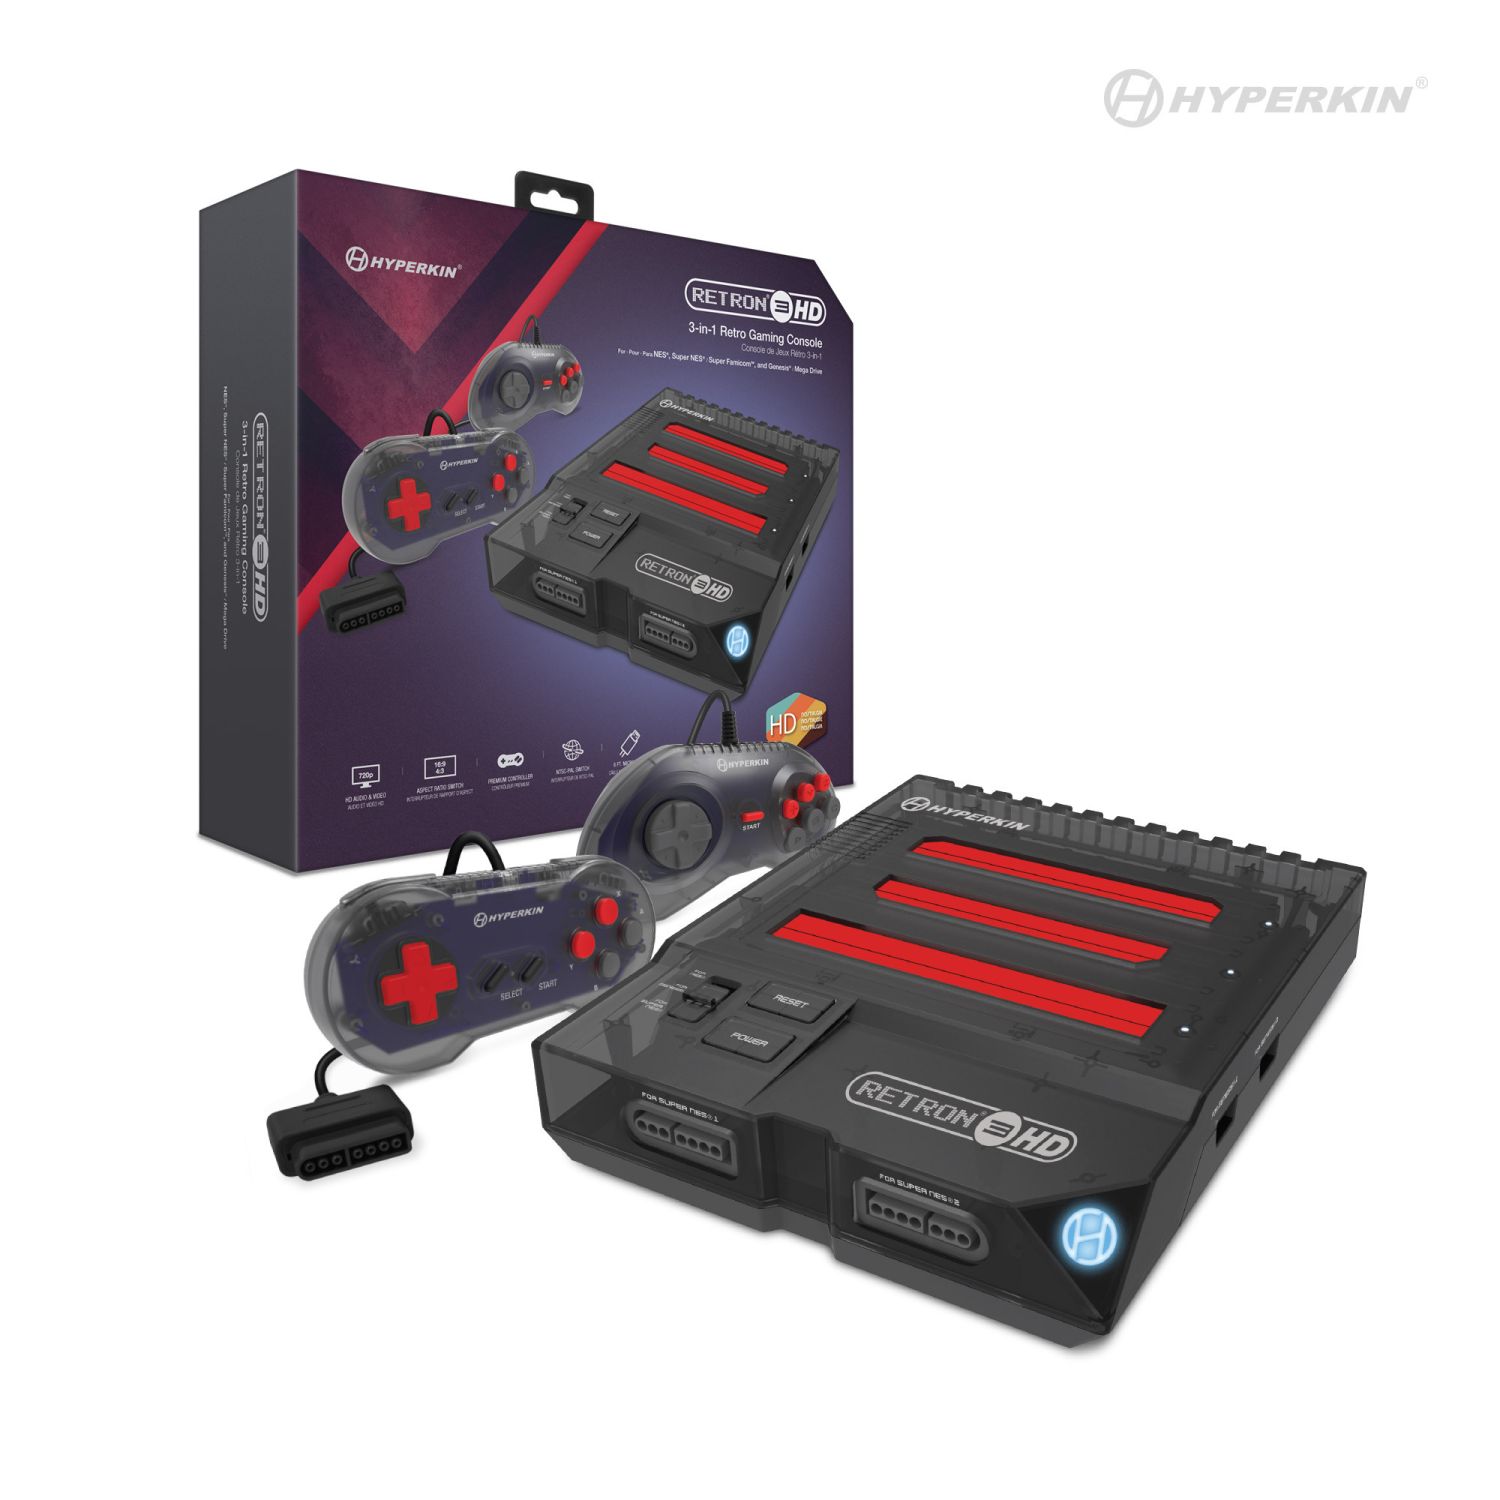 RetroN 3 HD 3-in-1 Retro Gaming Console | All Aboard Games